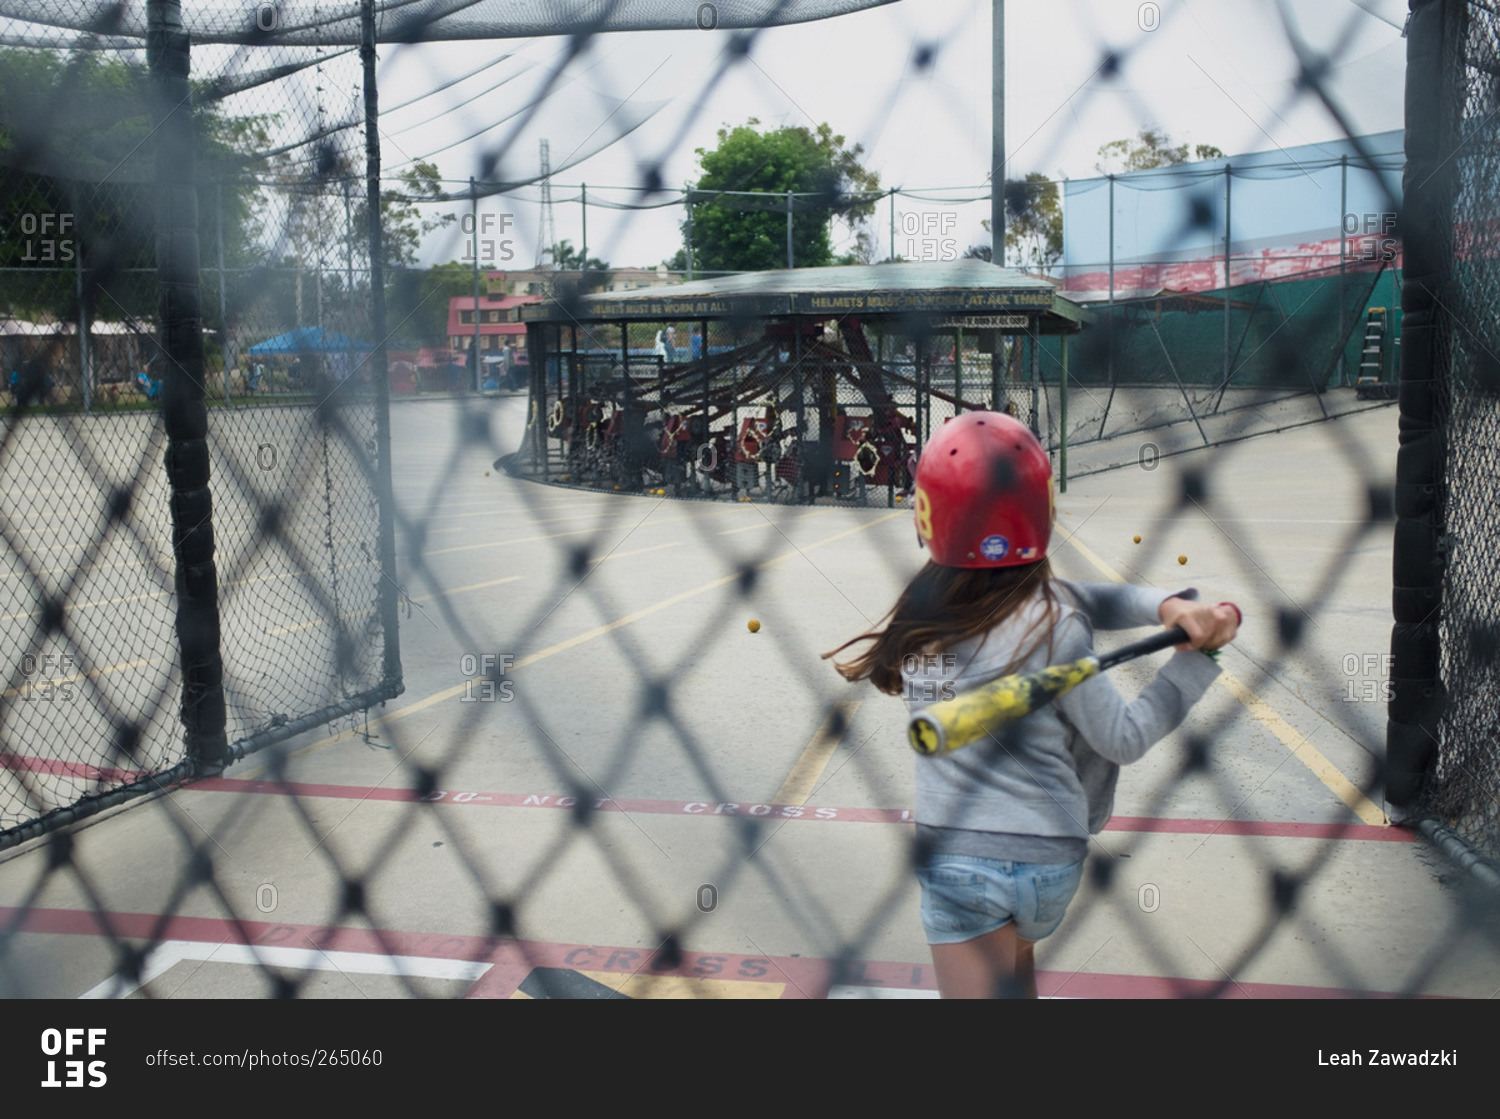 Girl swinging bat in batting cages